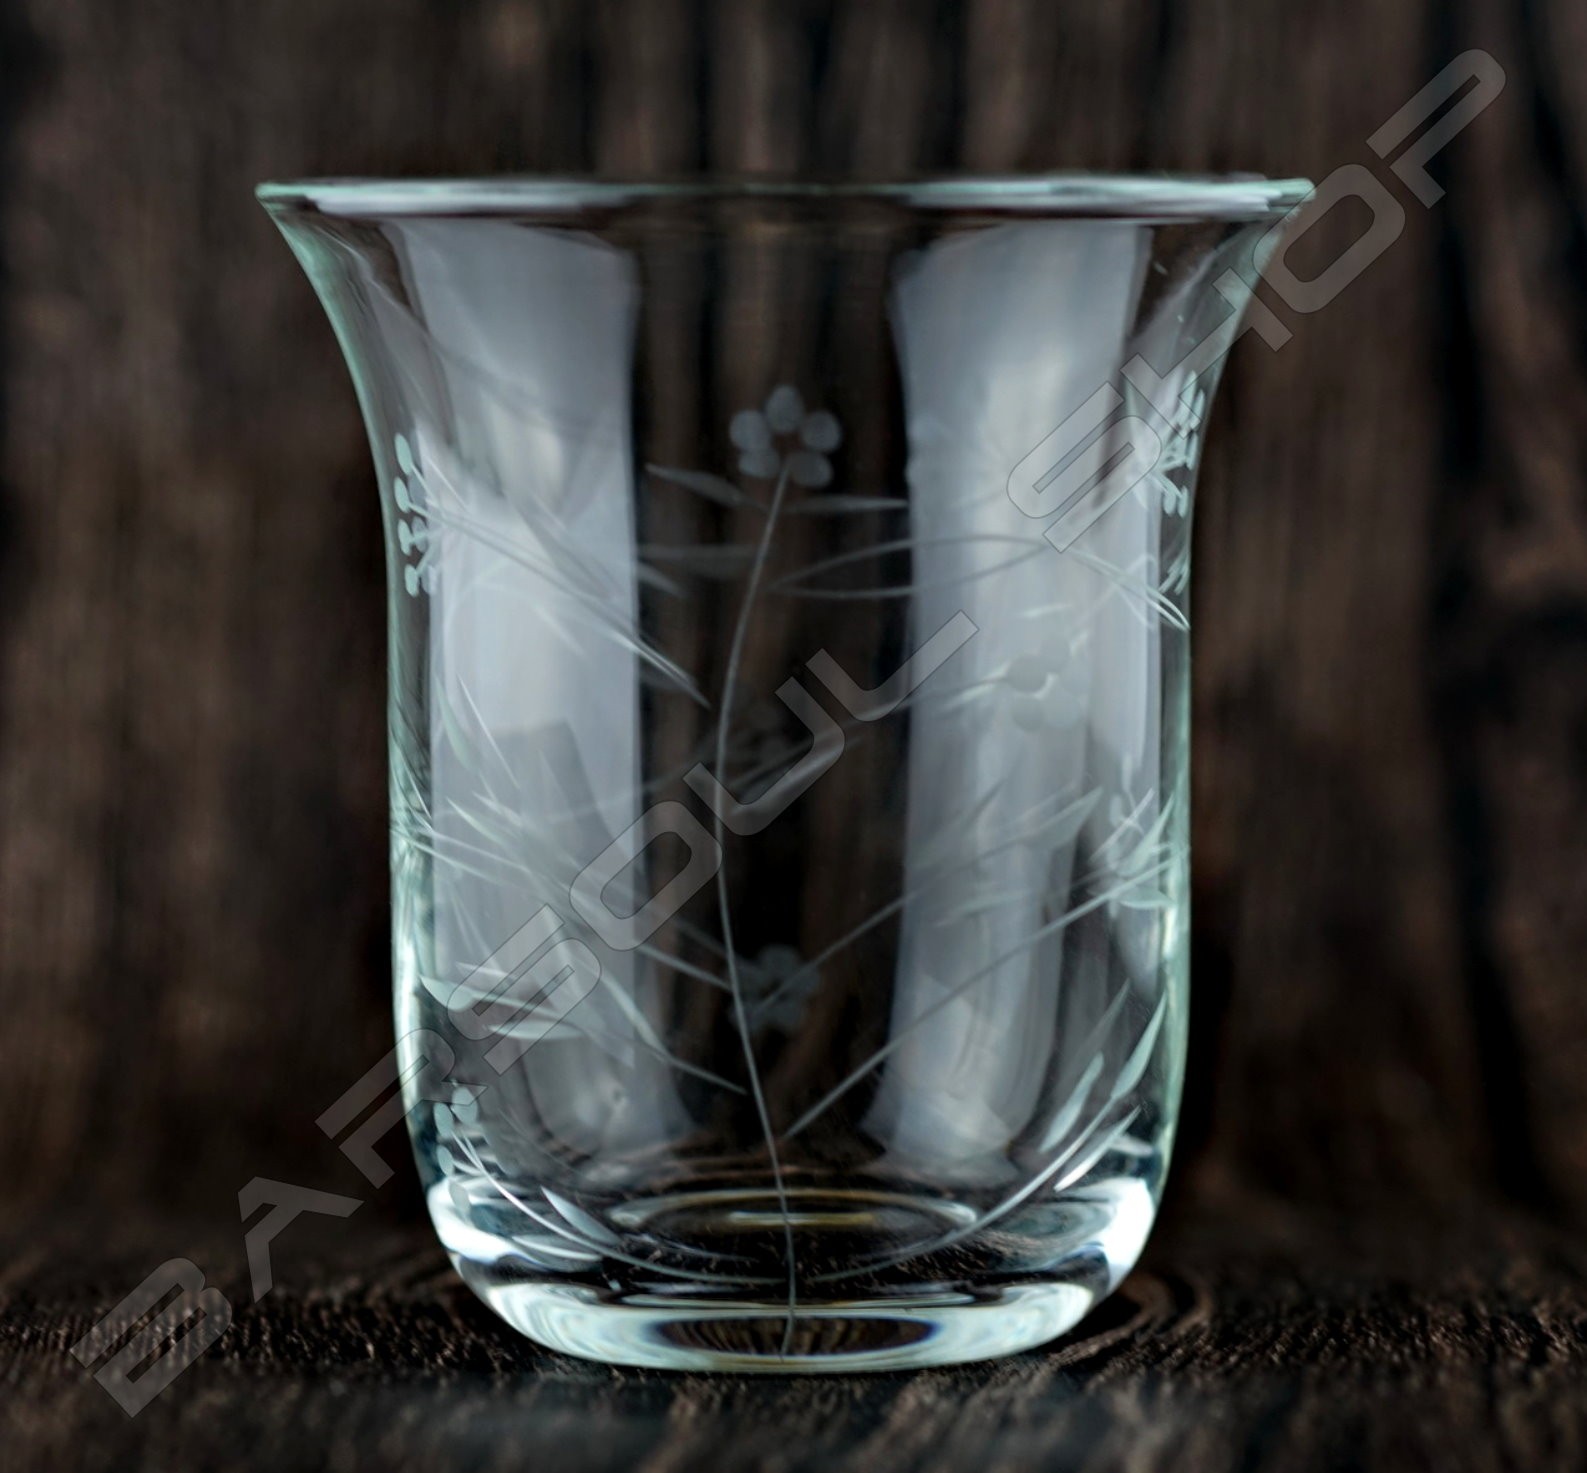 雕刻古典酒杯(風鈴)300ml Engraved classical glass(Wind chimes)